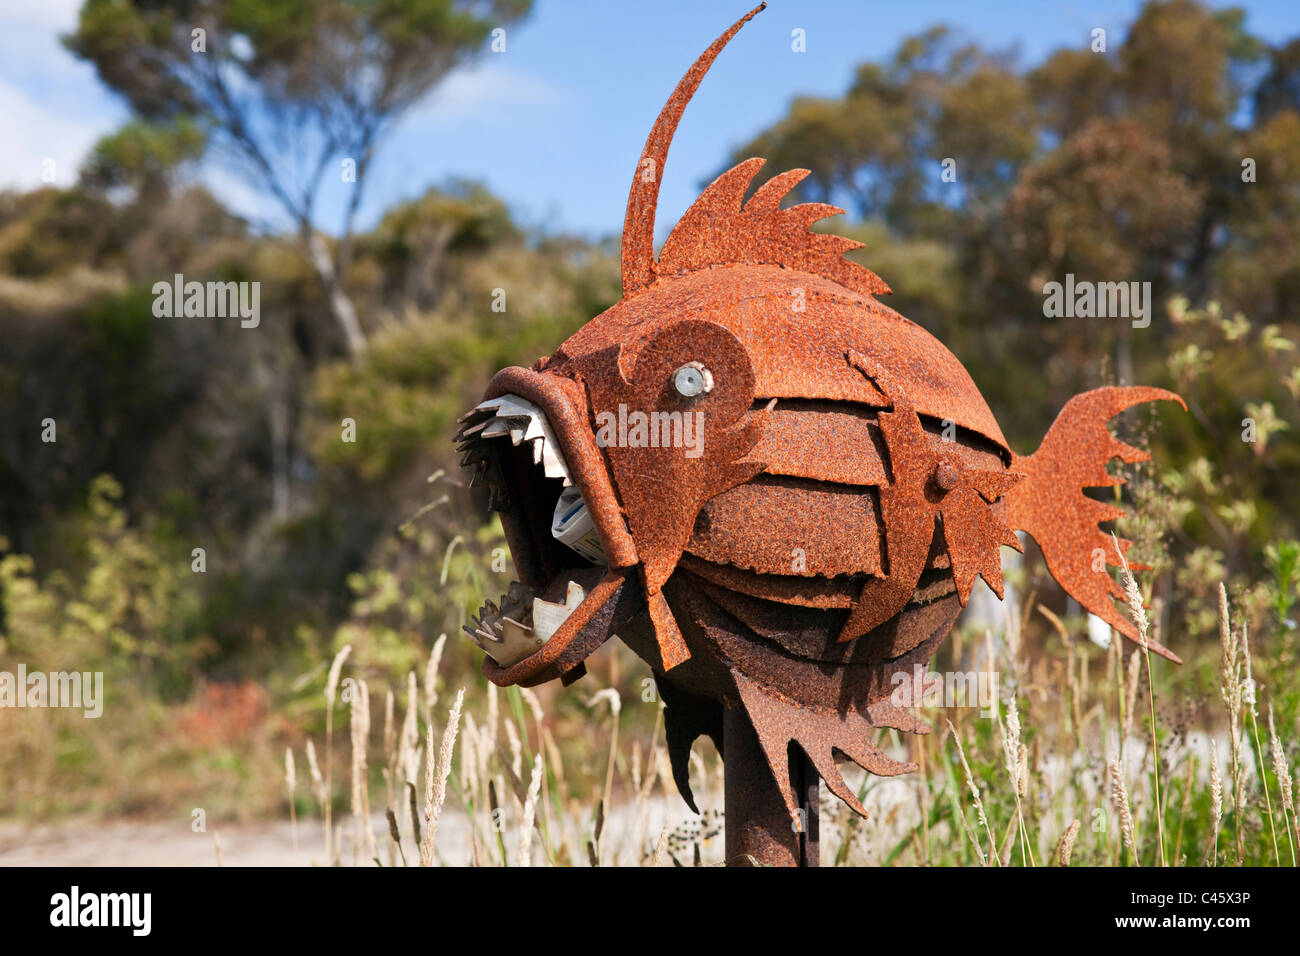 Quirky letterbox in shape of a Piranha. Denmark, Western Australia, Australia Stock Photo